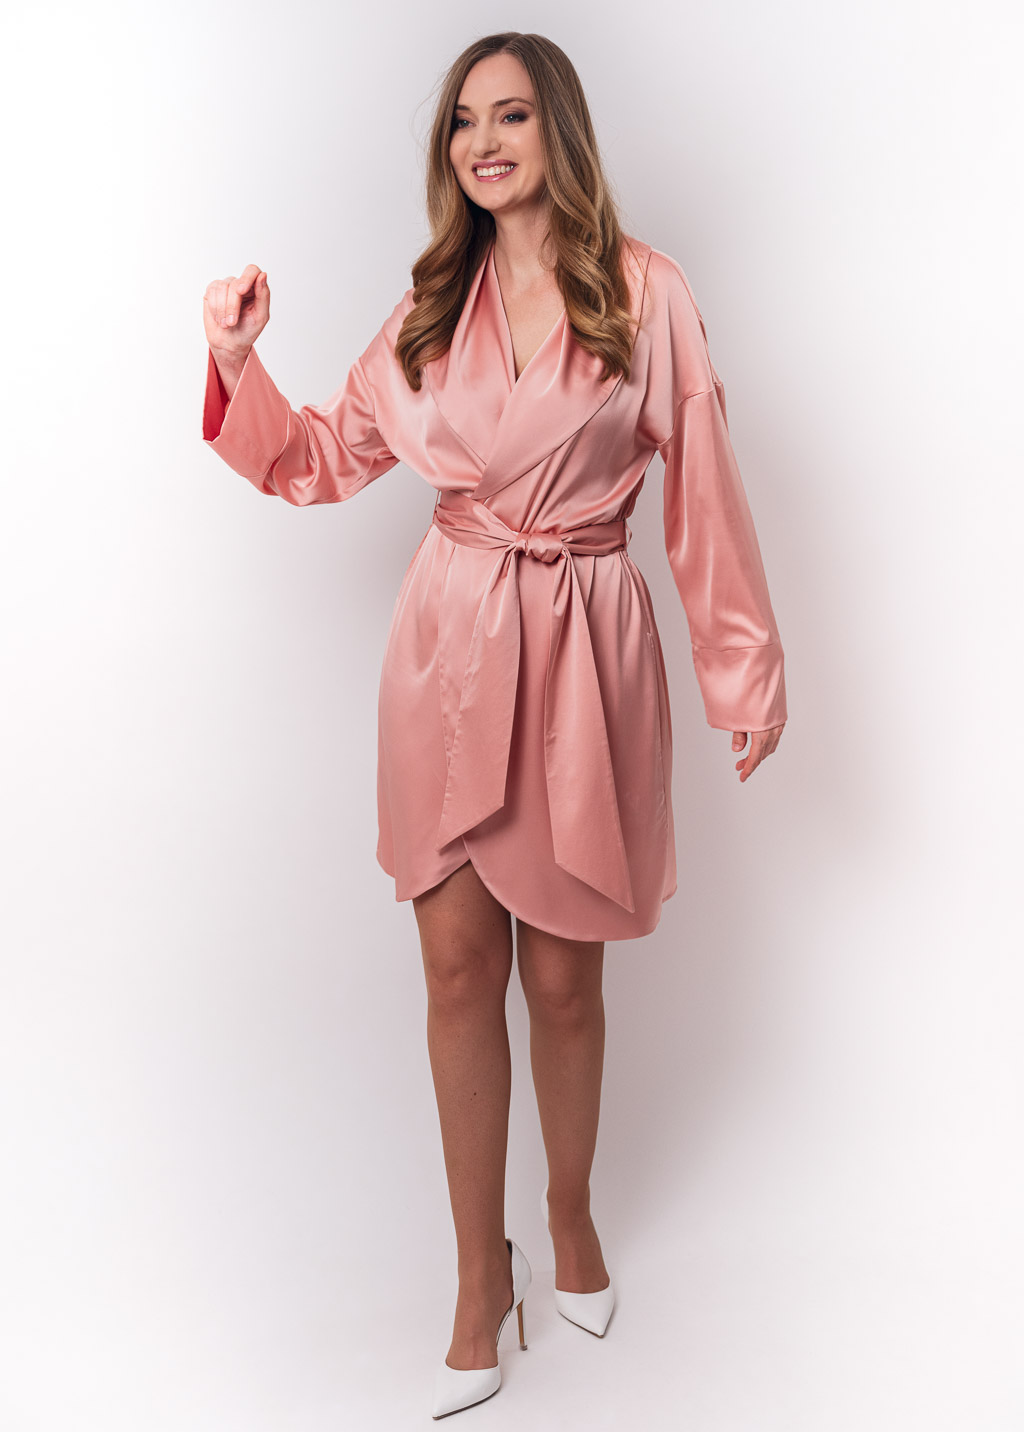 Blush pink silk robe with pockets